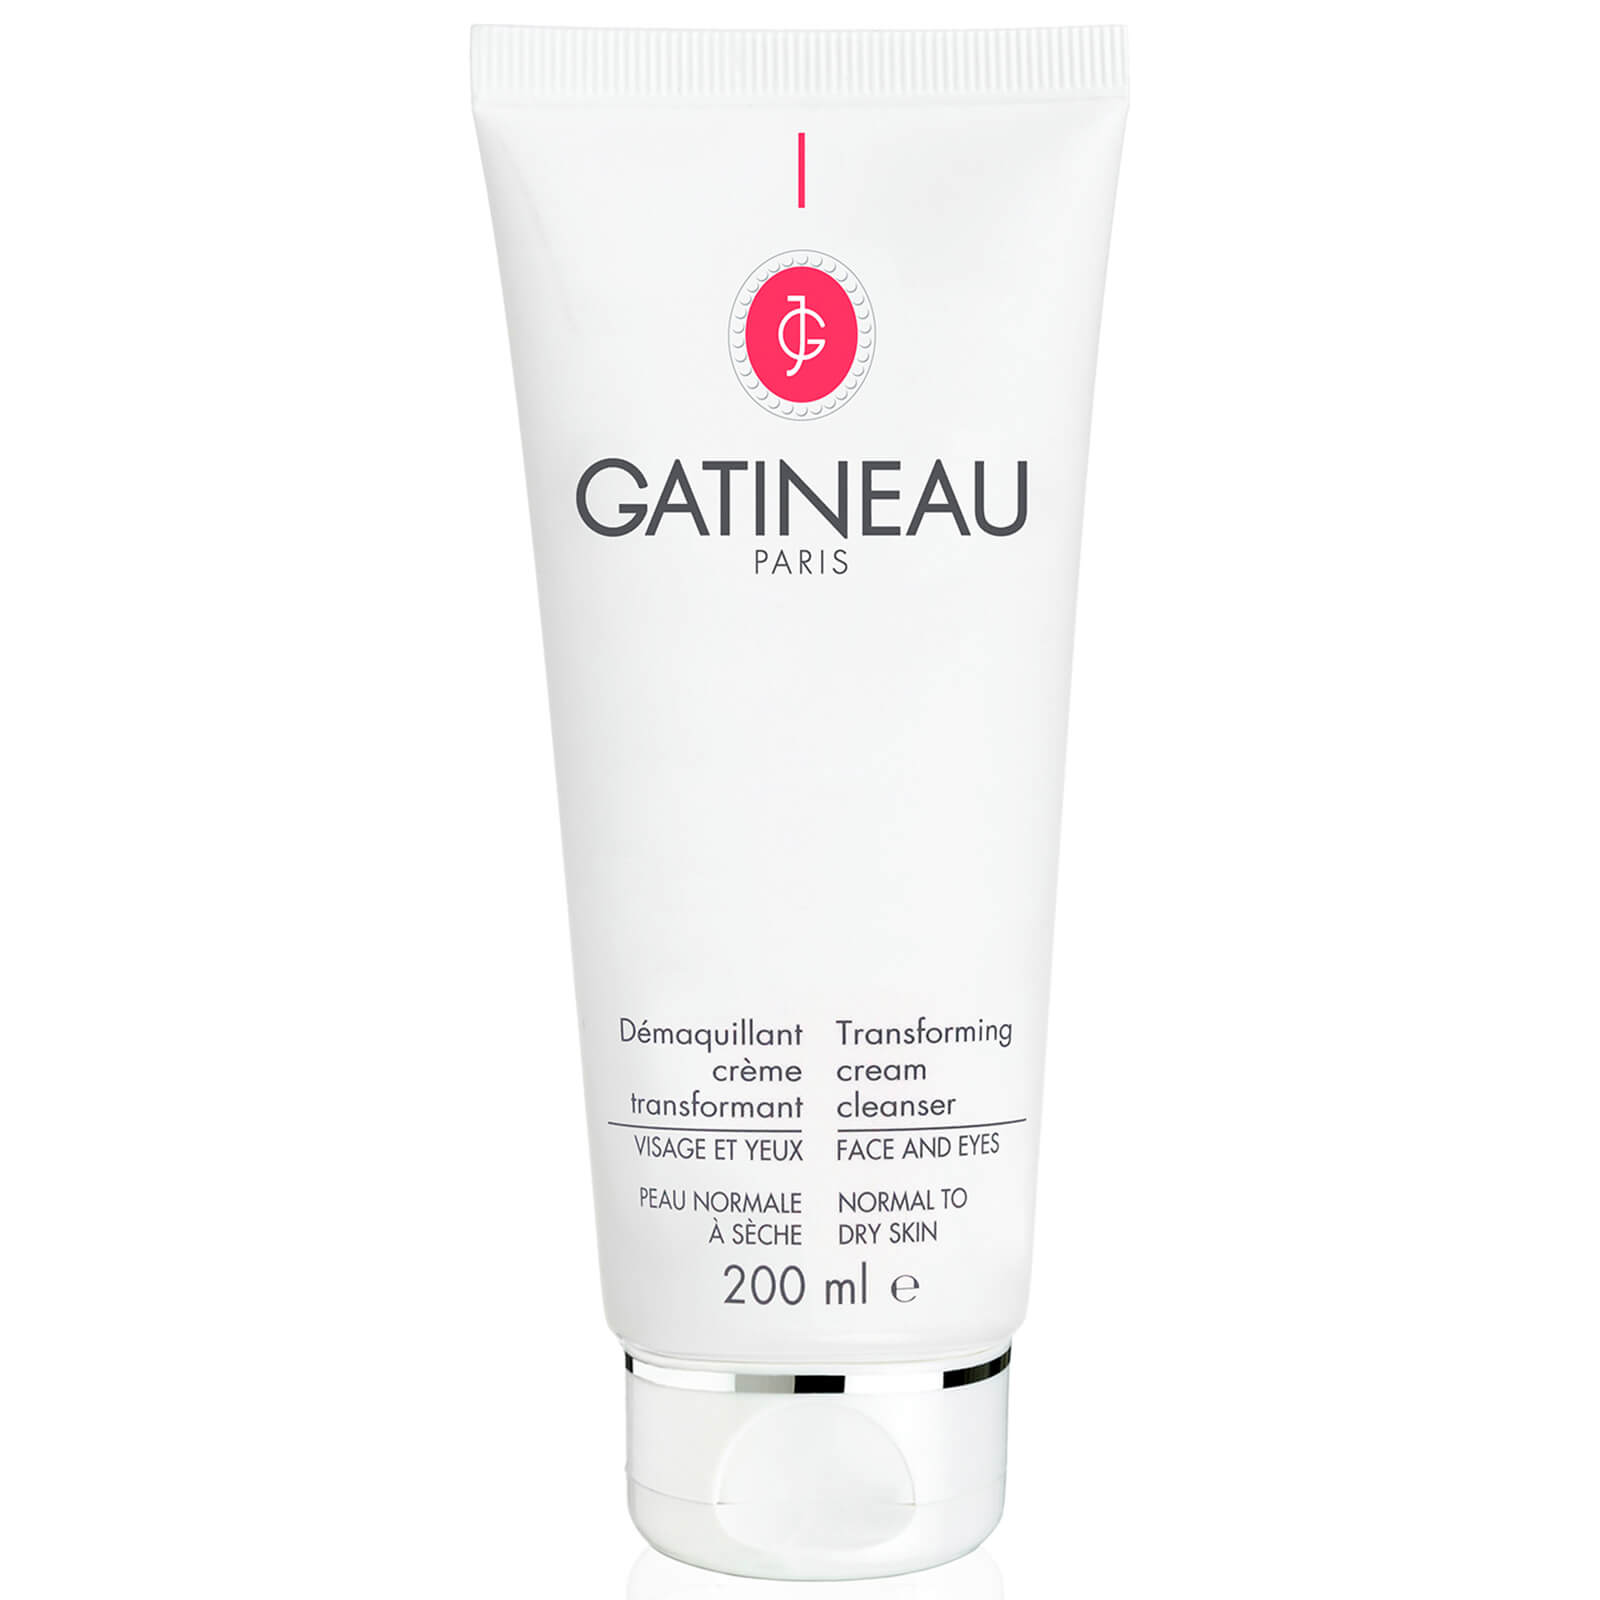 Gatineau Transforming Cream Cleanser 200ml lookfantastic.com imagine